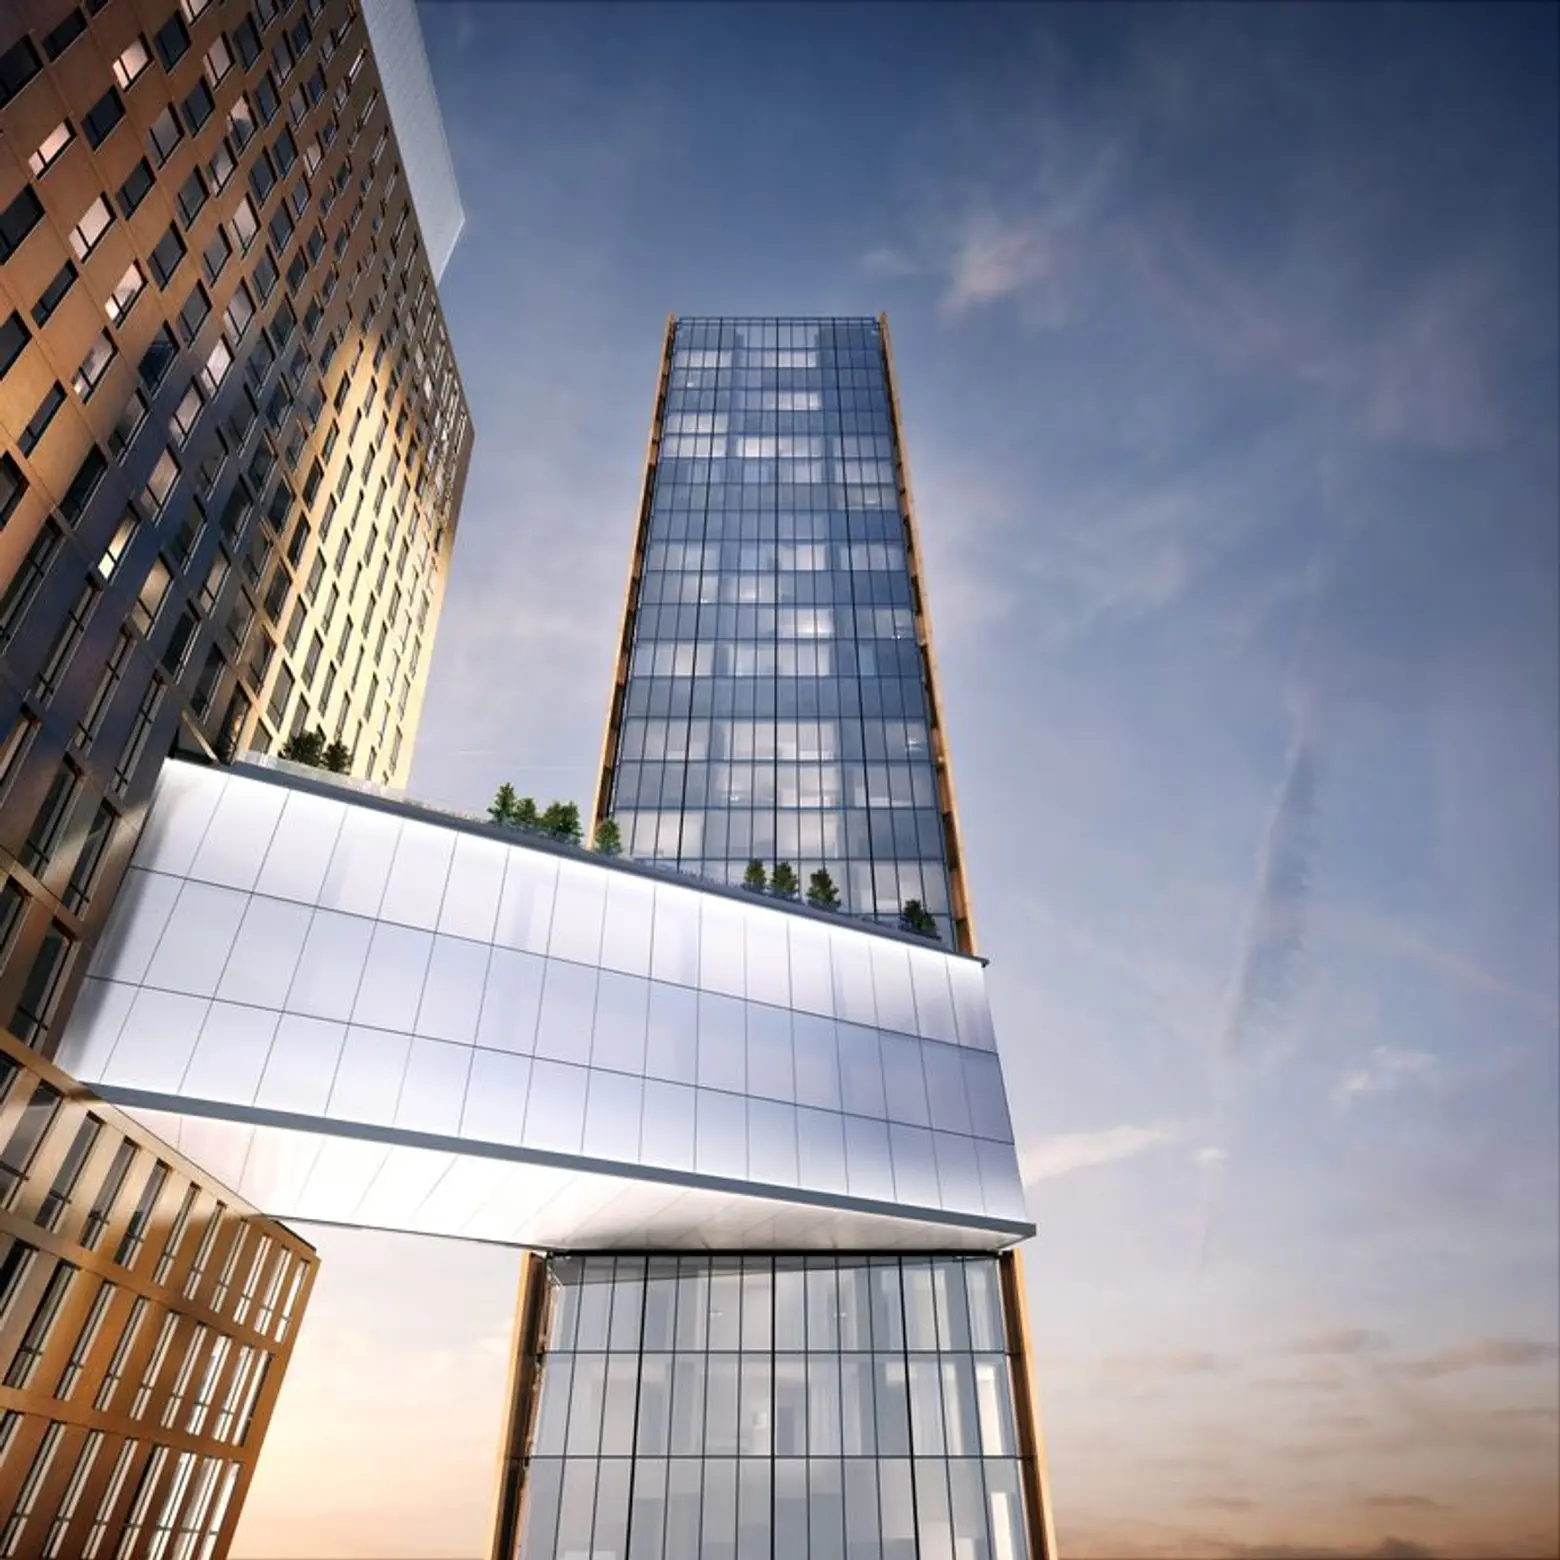 626 First Avenue, JDS Development, SHoP Architects, East River development